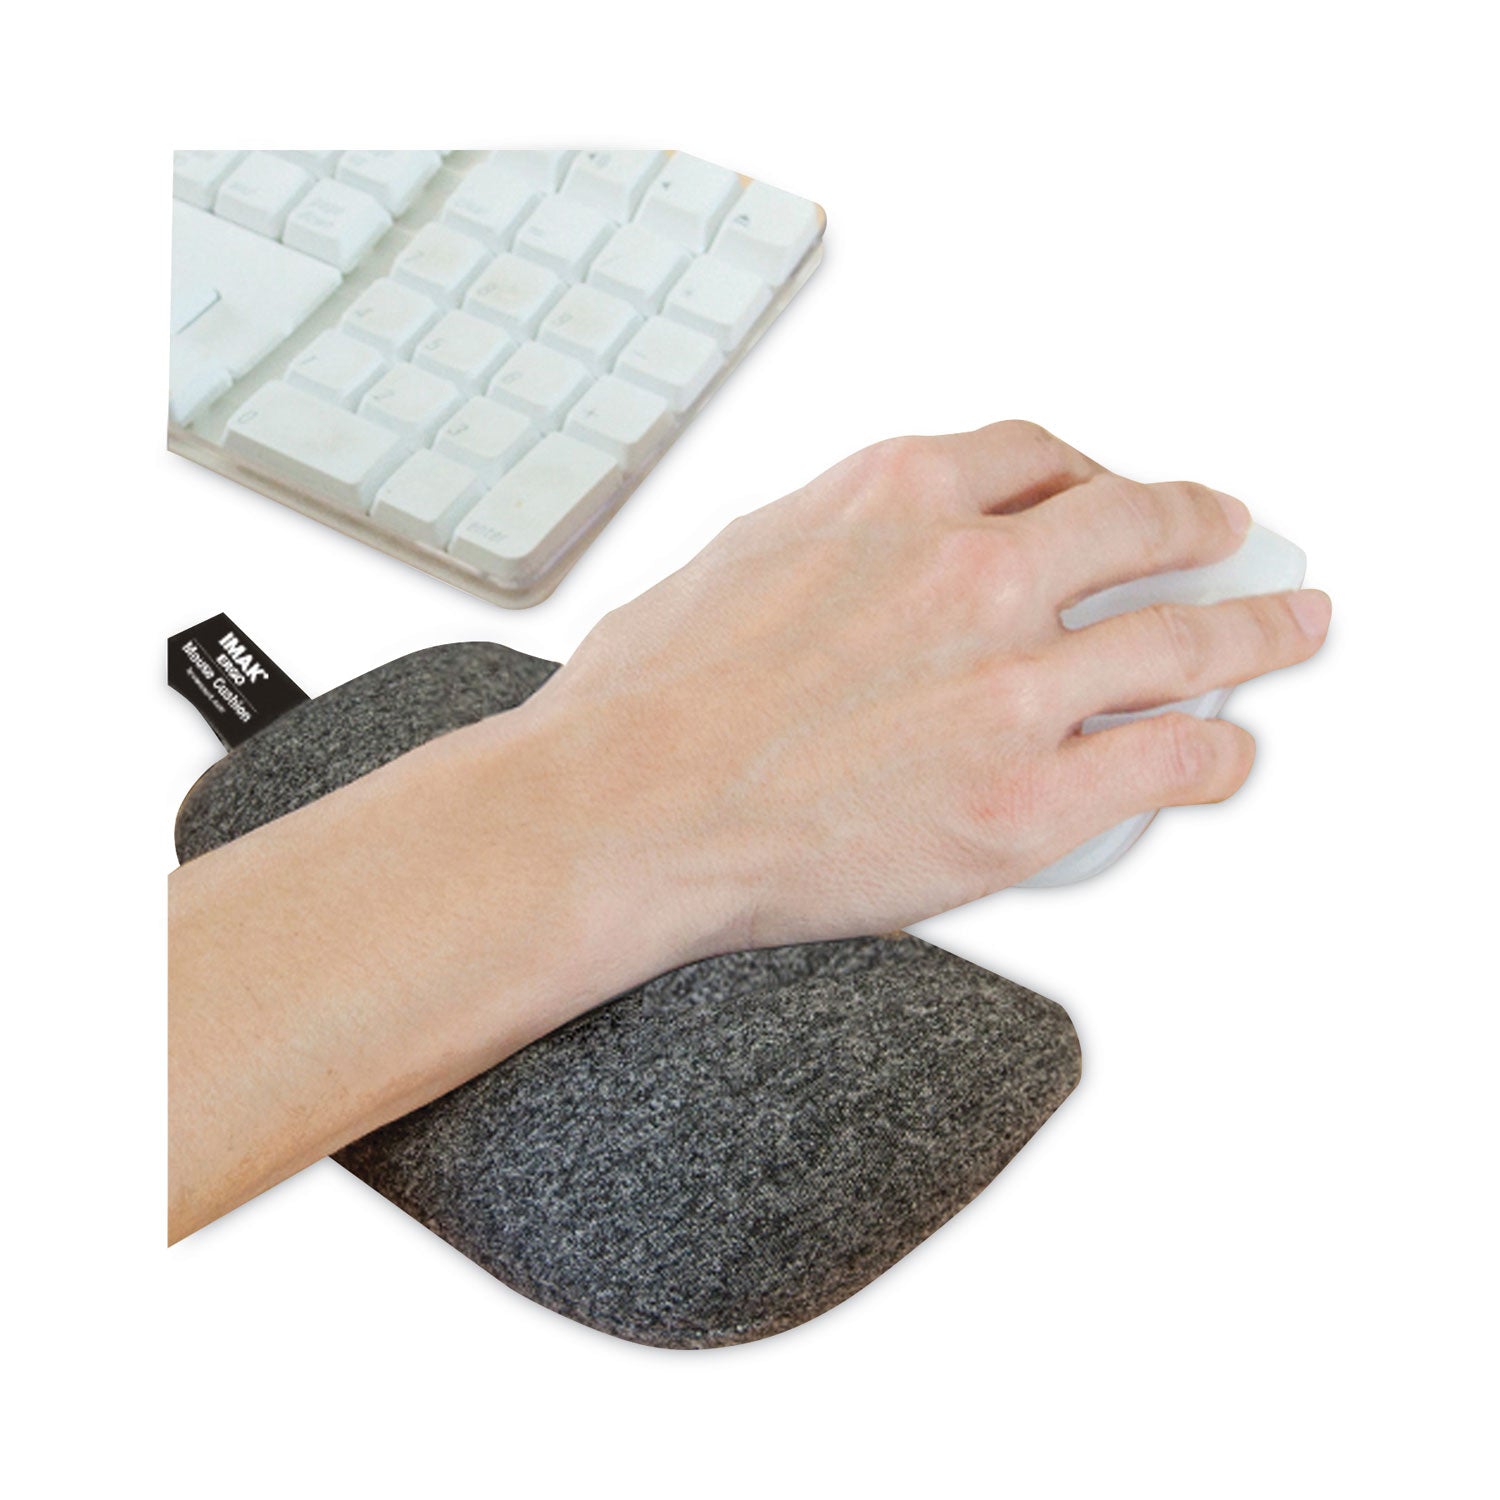 Mouse Wrist Cushion, 5.75 x 3.75, Gray - 